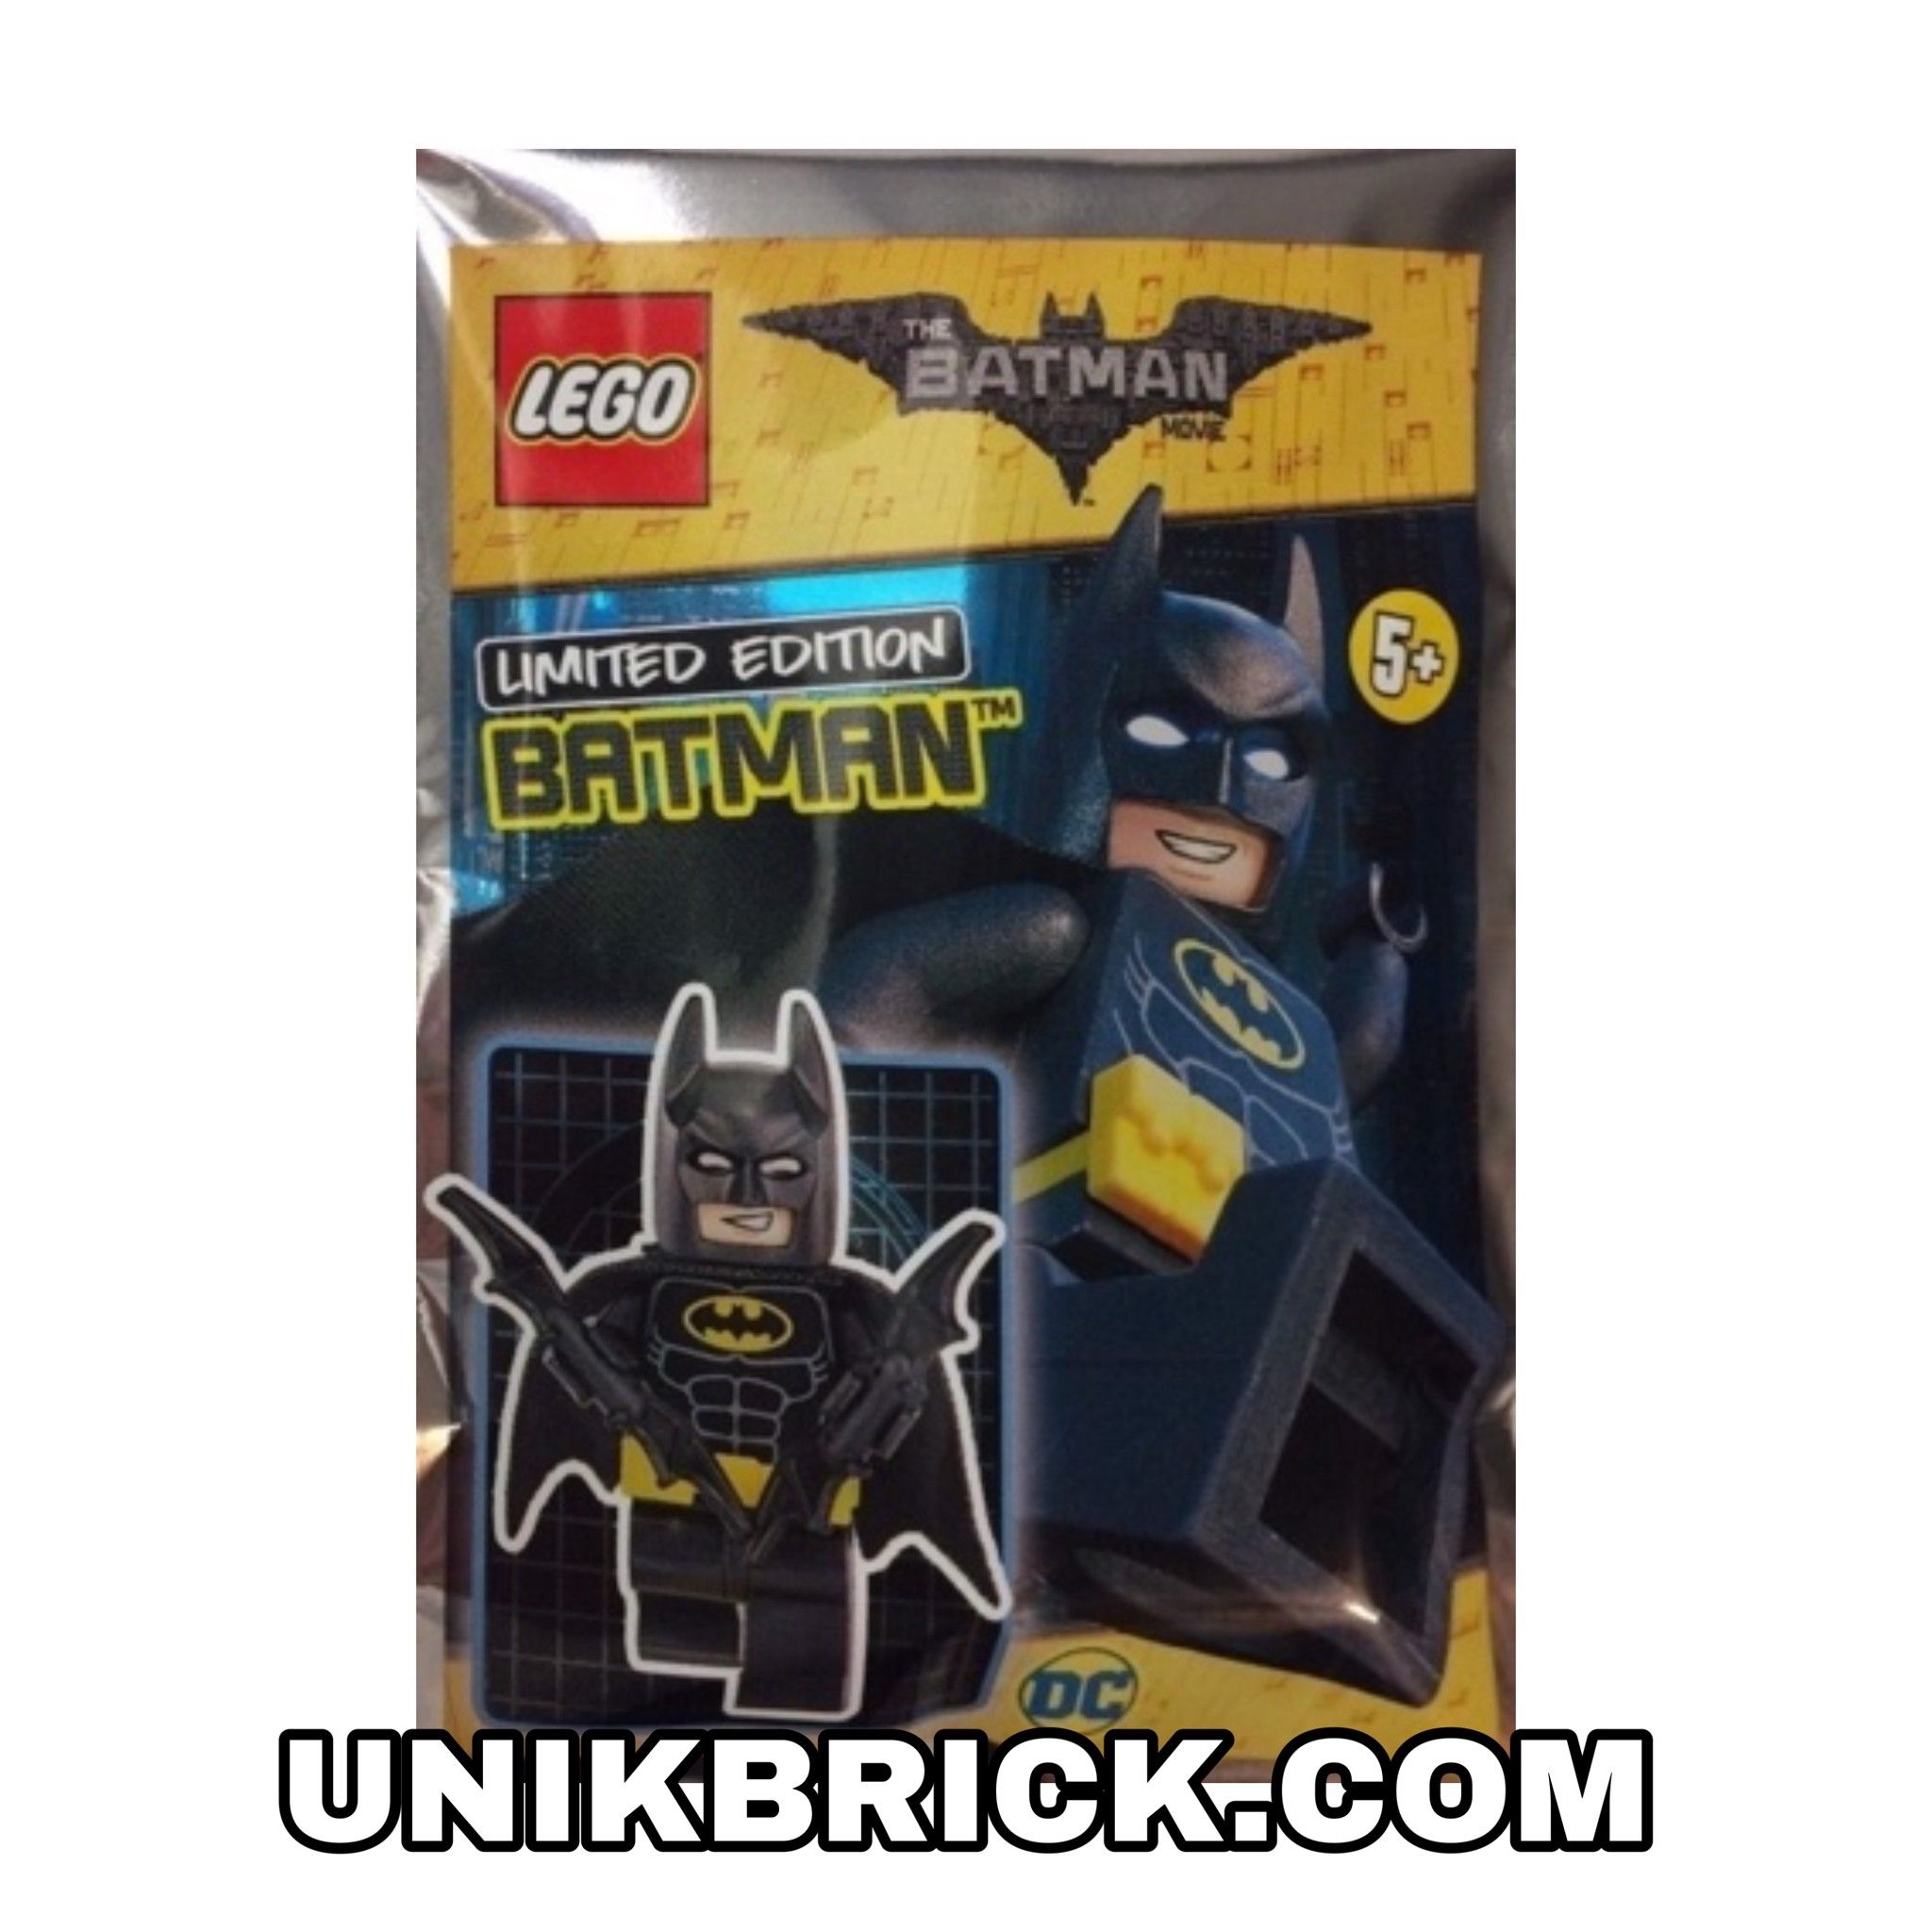 ORDER ITEMS] LEGO Batman Foil Pack 1 – UNIK BRICK